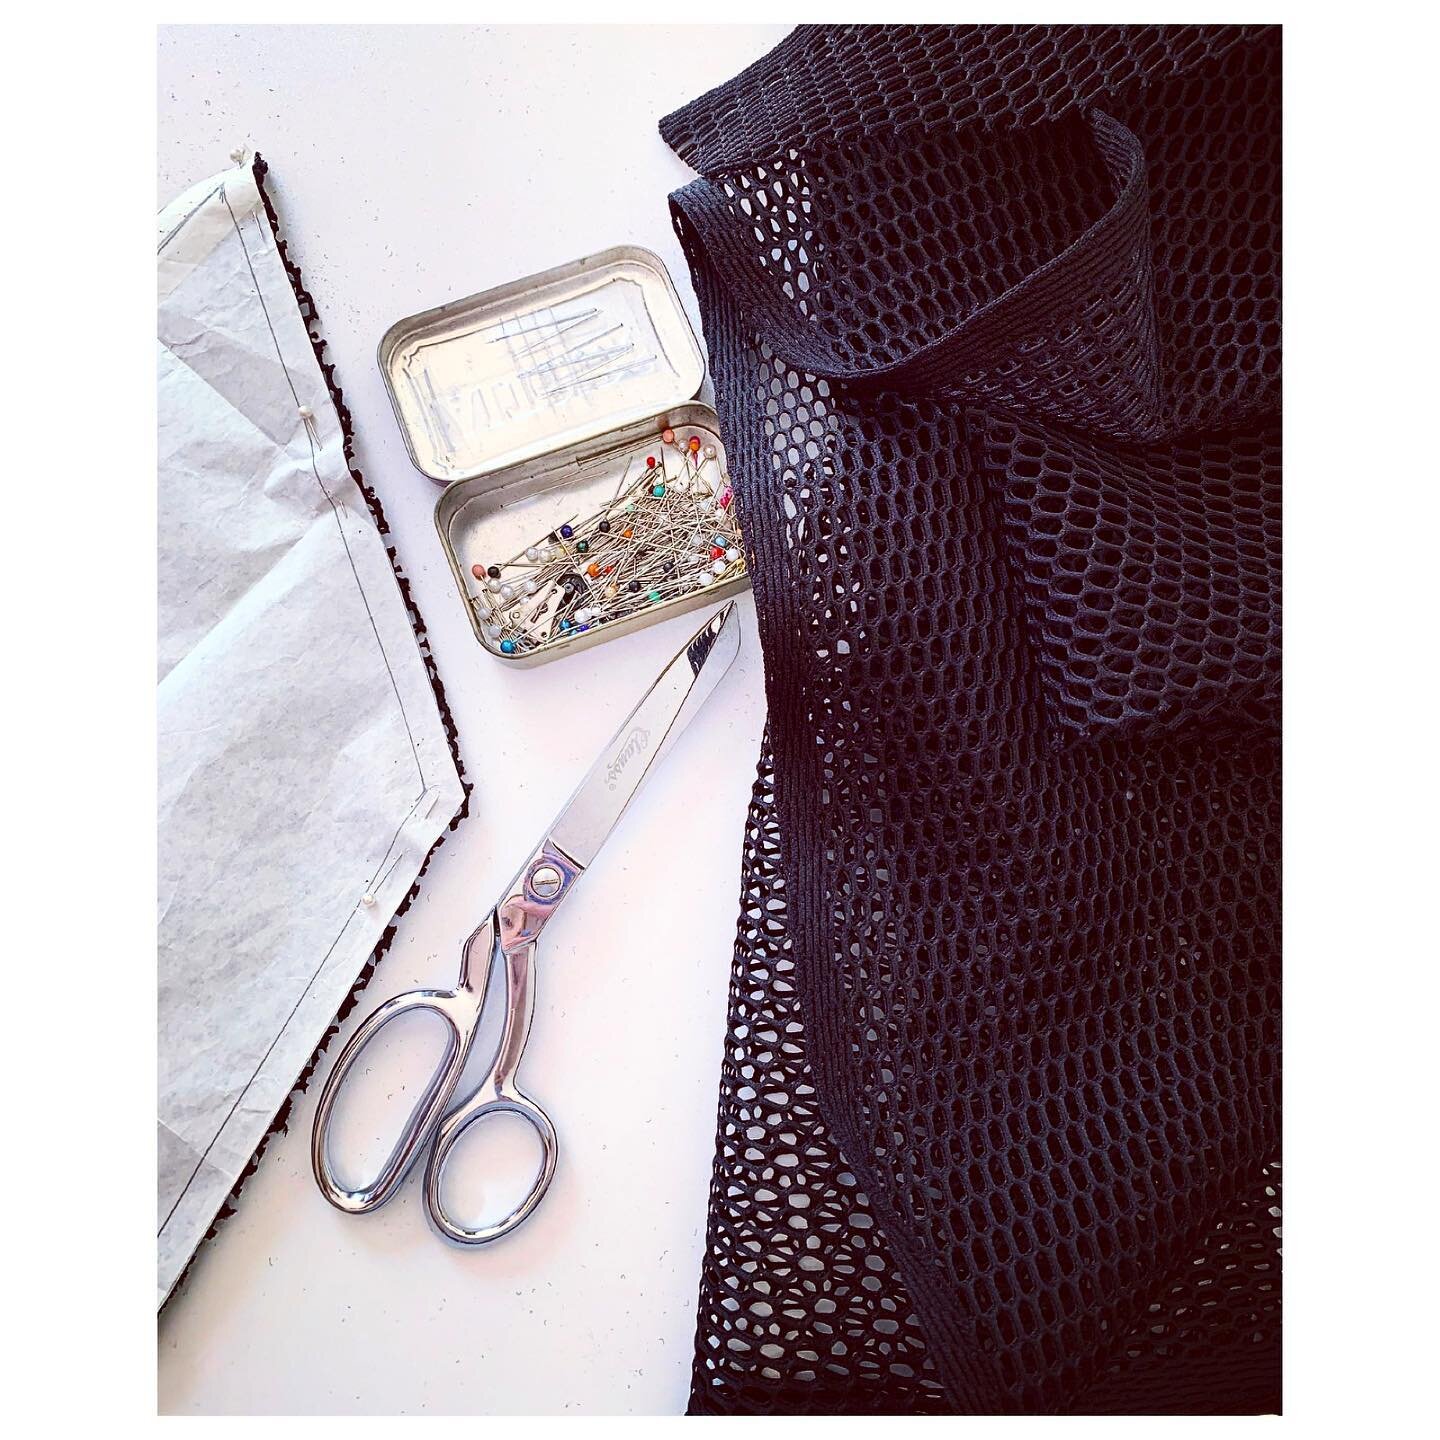 Back to Black... working on a new piece... can&rsquo;t wait to share!
✖️🖤✖️
.
.
.
.
.
.
 #luxury #luxuryfashionlove #madetoorder #editorial #handmade #designer #couturefashion #fashionable #fashionaddict #australiandesigner #madeinlosangeles #fashio